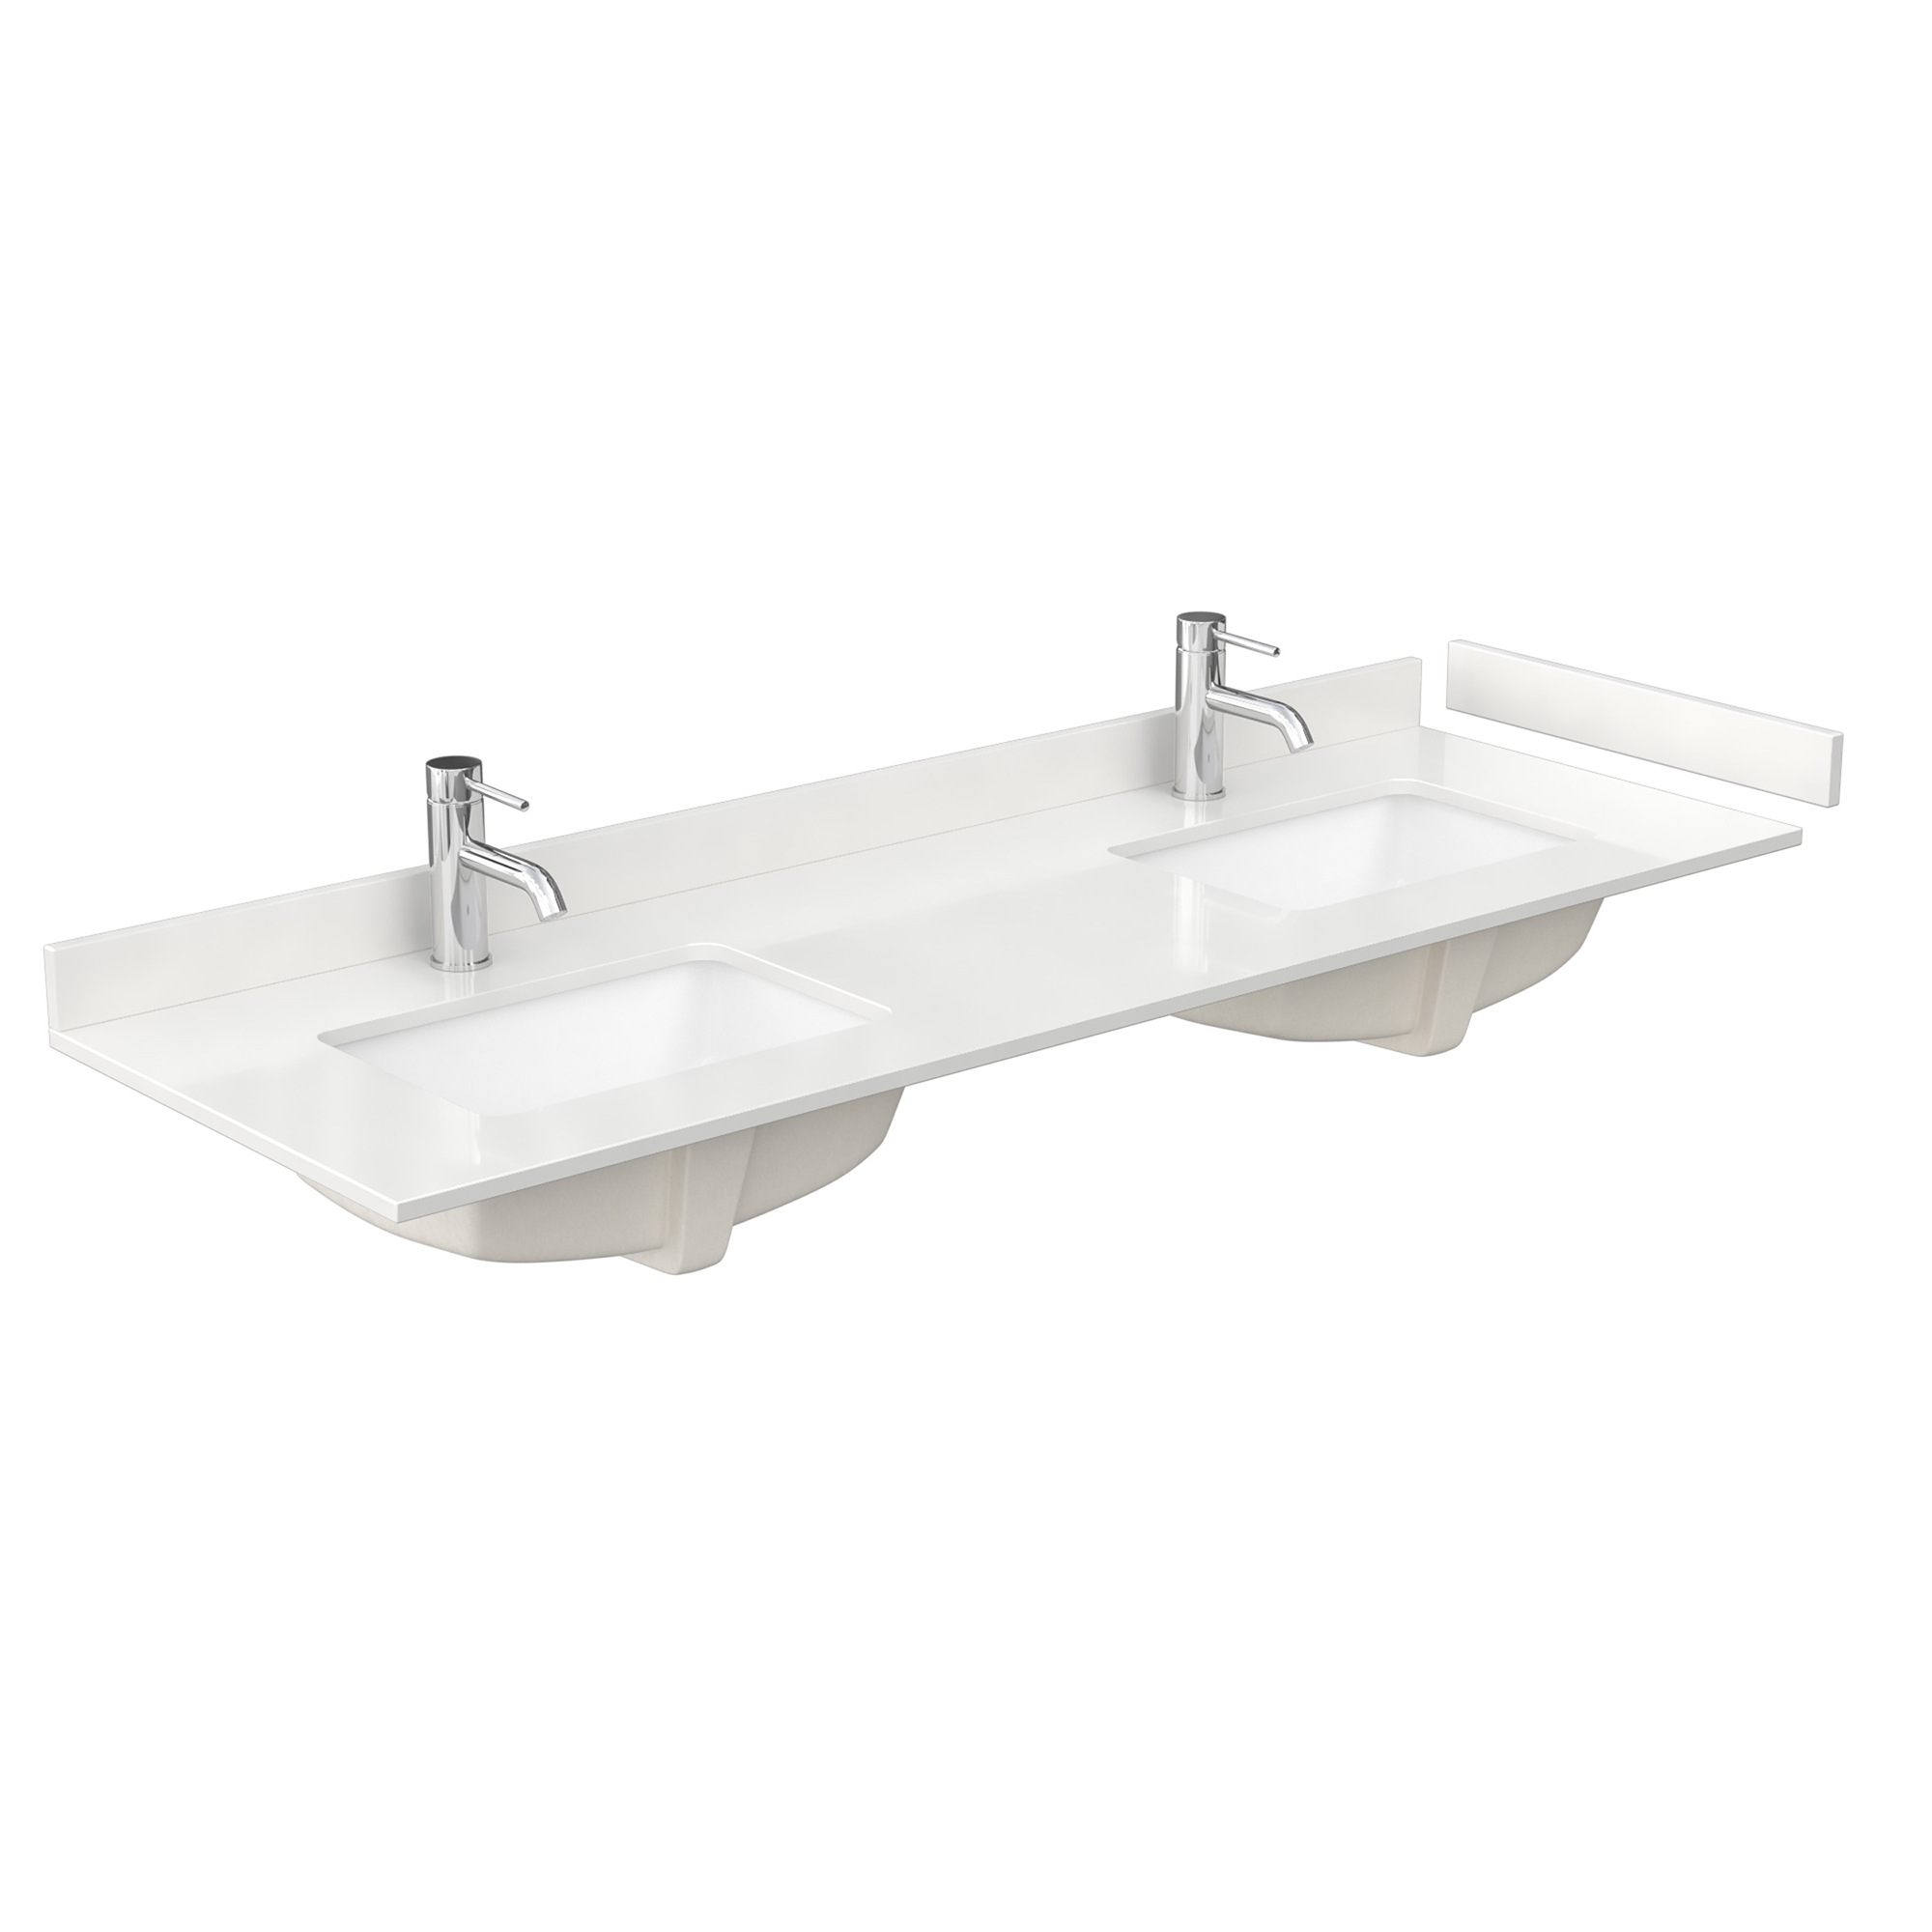 66" Double Countertop - White Quartz (1000) with Undermount Square Sinks (1-Hole) - Includes Backsplash and Sidesplash WCFQC166DTOPUNSWQ